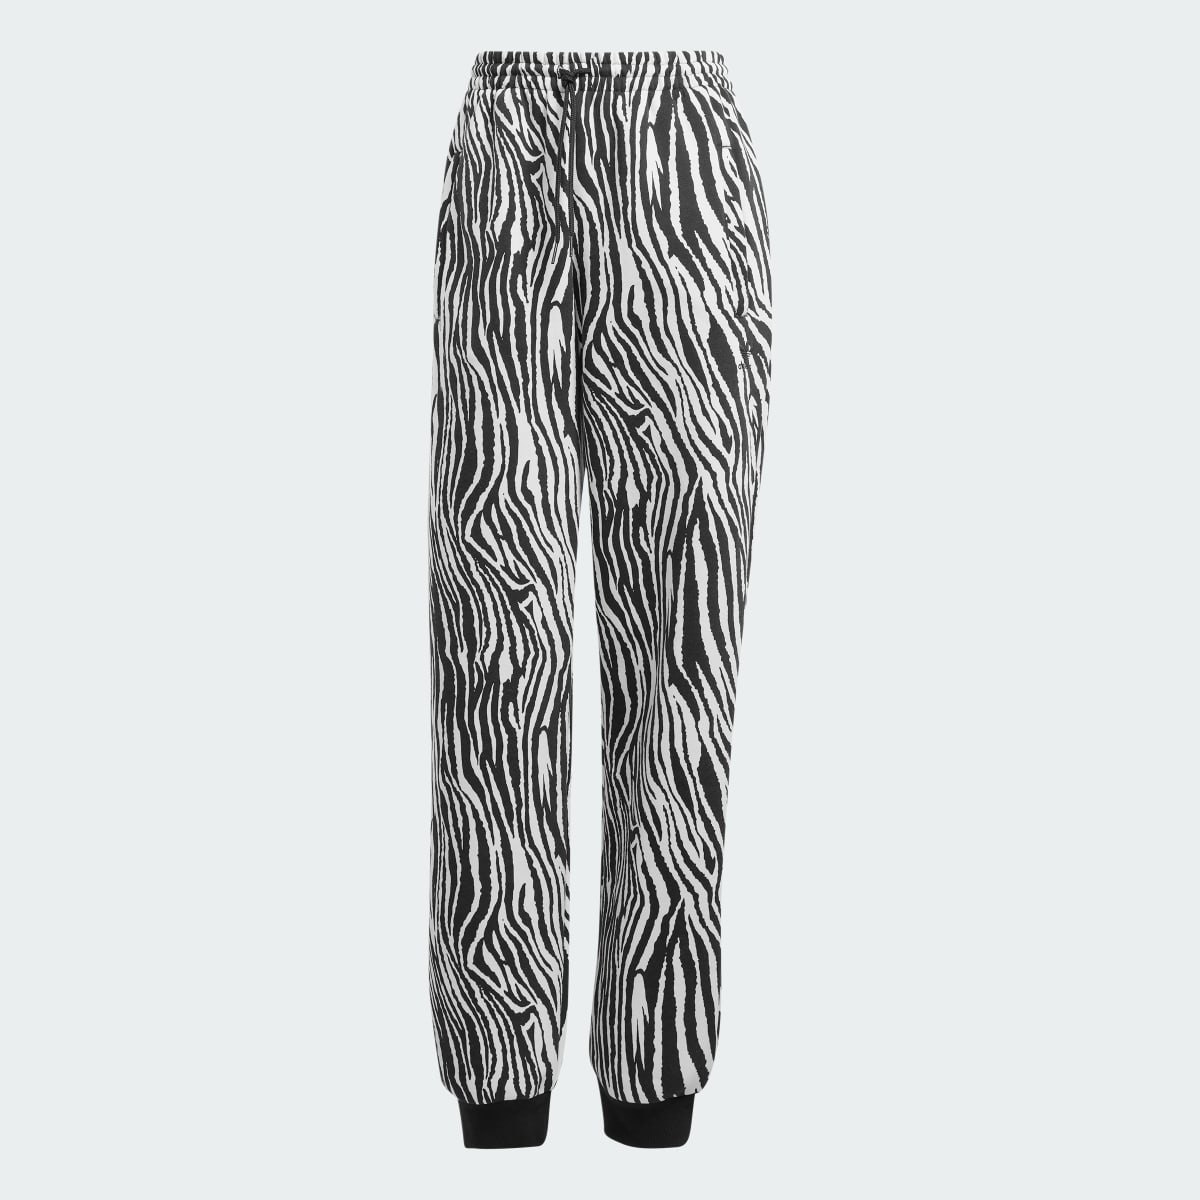 Adidas Pantalón Allover Zebra Animal Print Essentials. 4